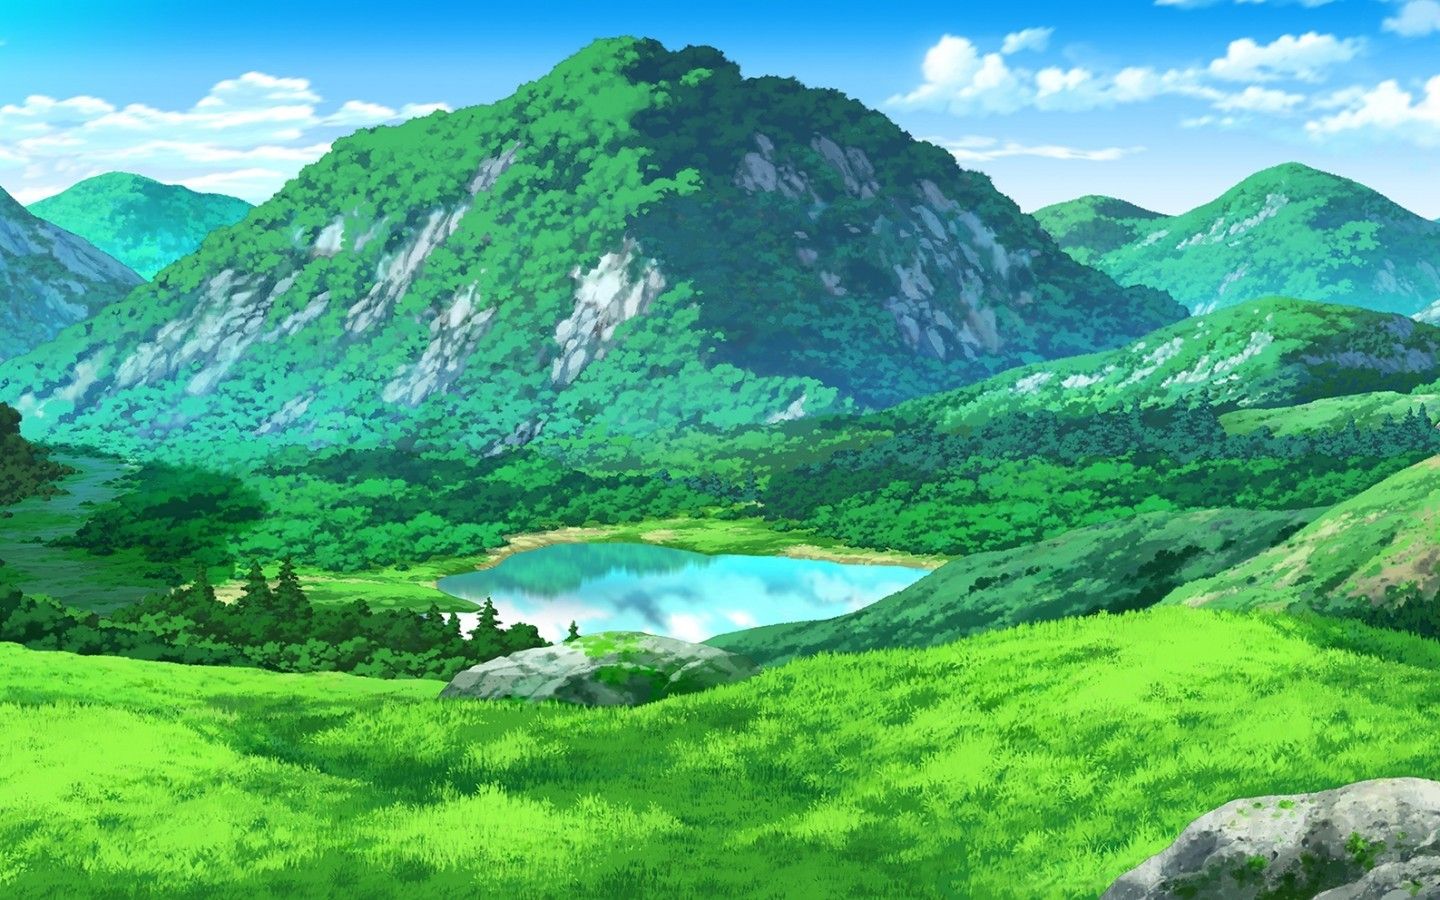 Anime Landscape, Mountain, Field, Grass, Lake, Scenic Mountain Scenery